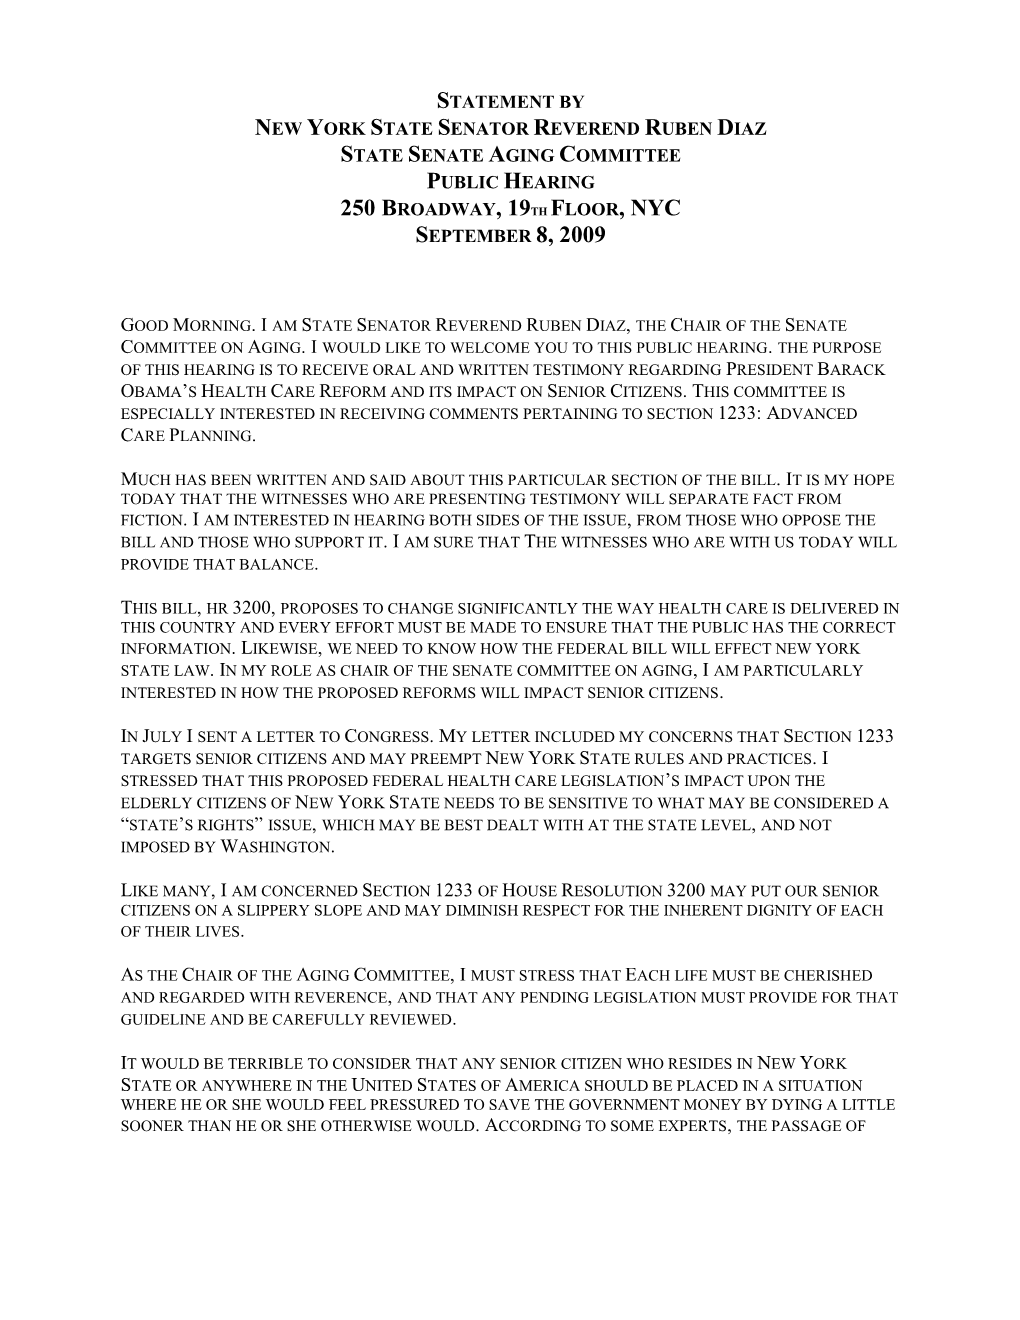 Statement by New York State Senator Reverend Ruben Diaz State Senate Aging Committee Public Hearing 250 Broadway, 19Th Floor, Nyc September 8, 2009